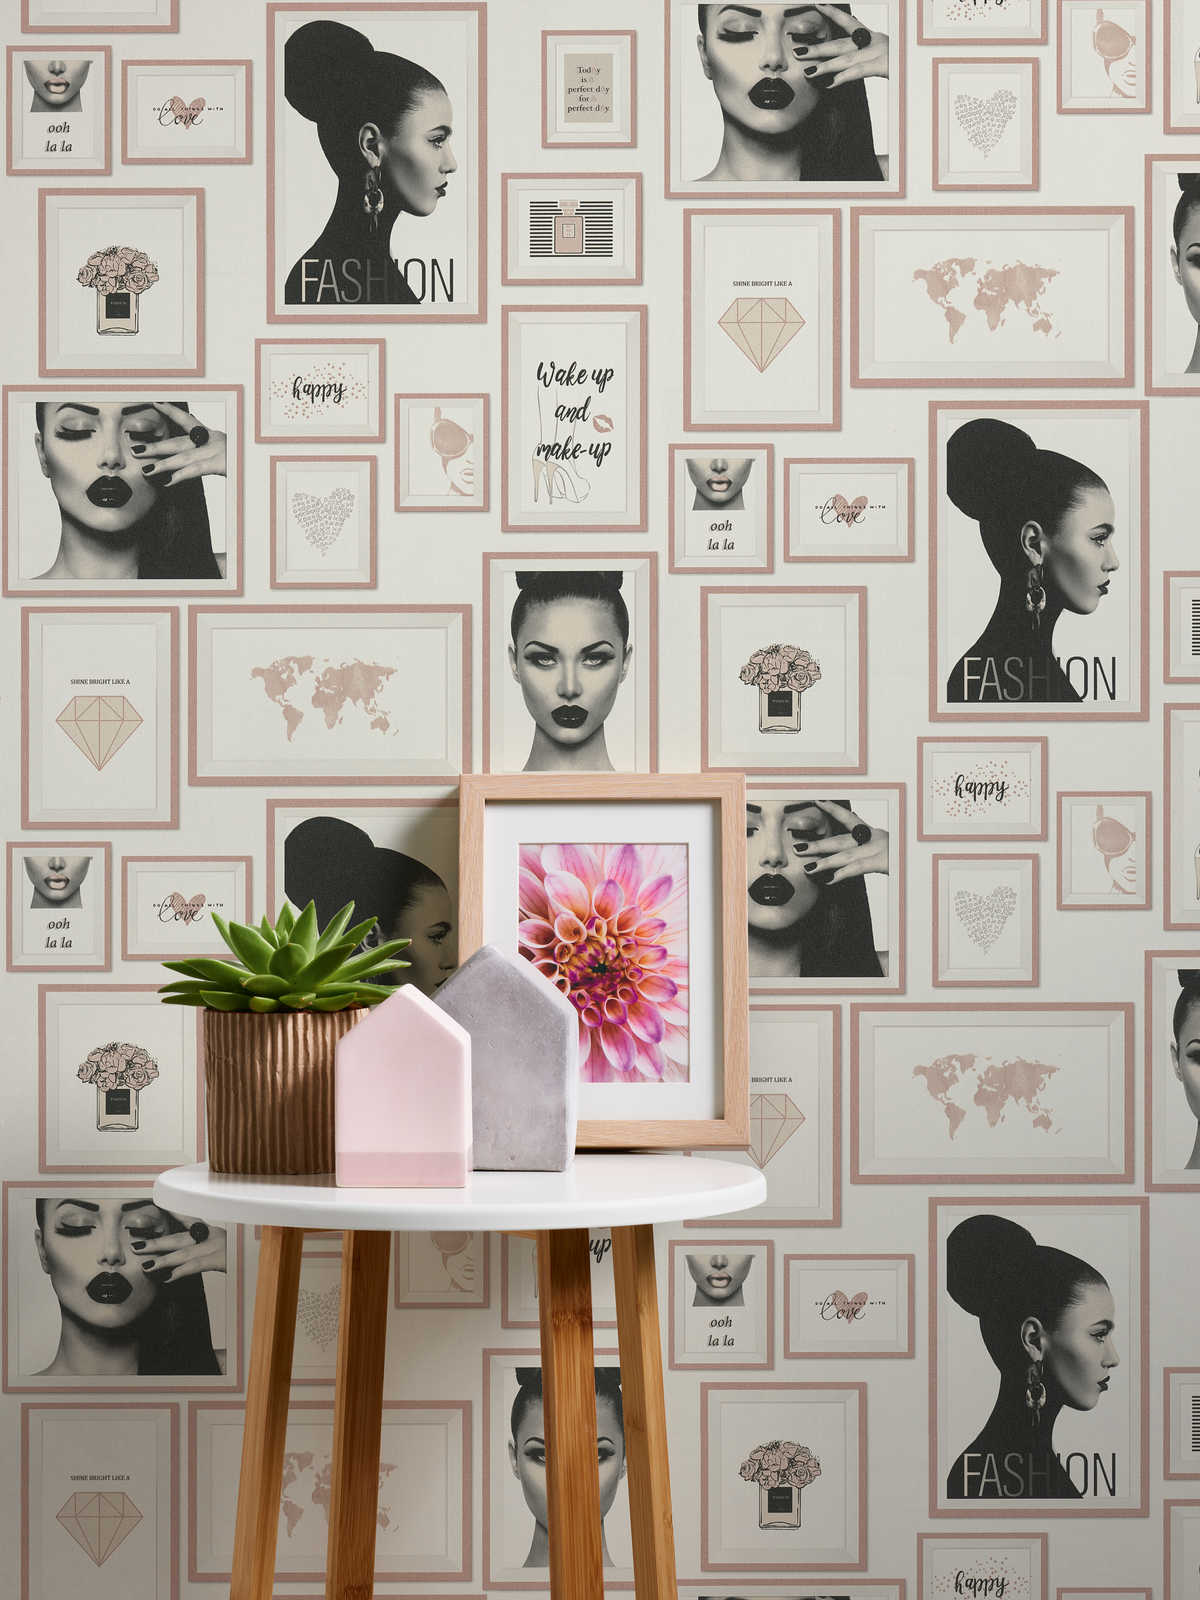             Papel pintado de diseño de moda con decoración de pared - rosa, negro, blanco
        